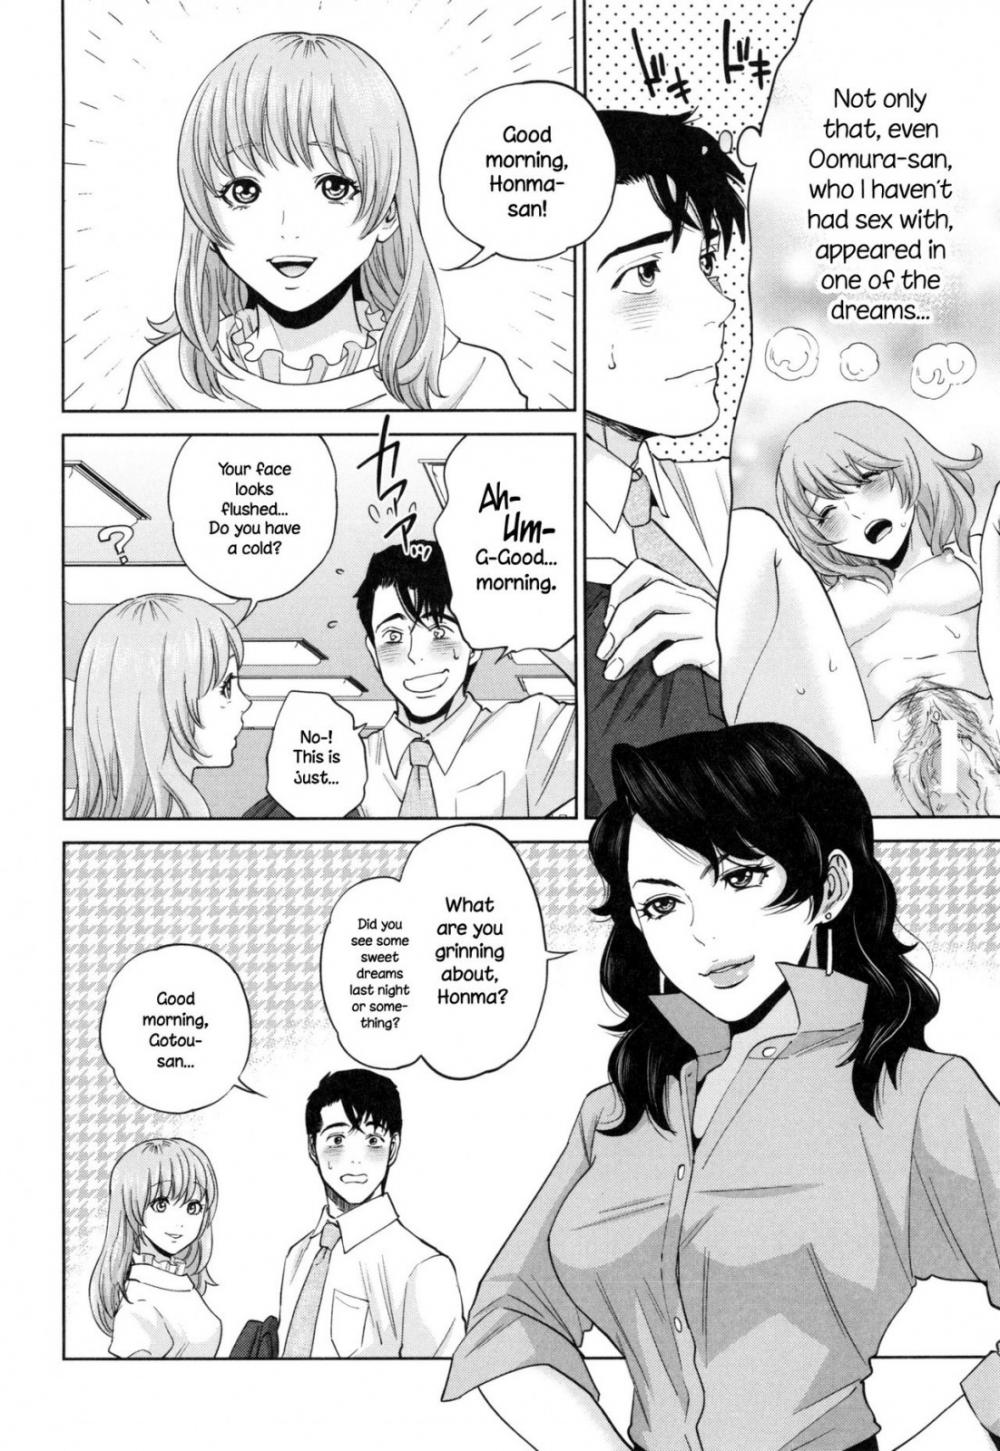 Hentai Manga Comic-Office Love Scramble-Chapter 6 - End-2